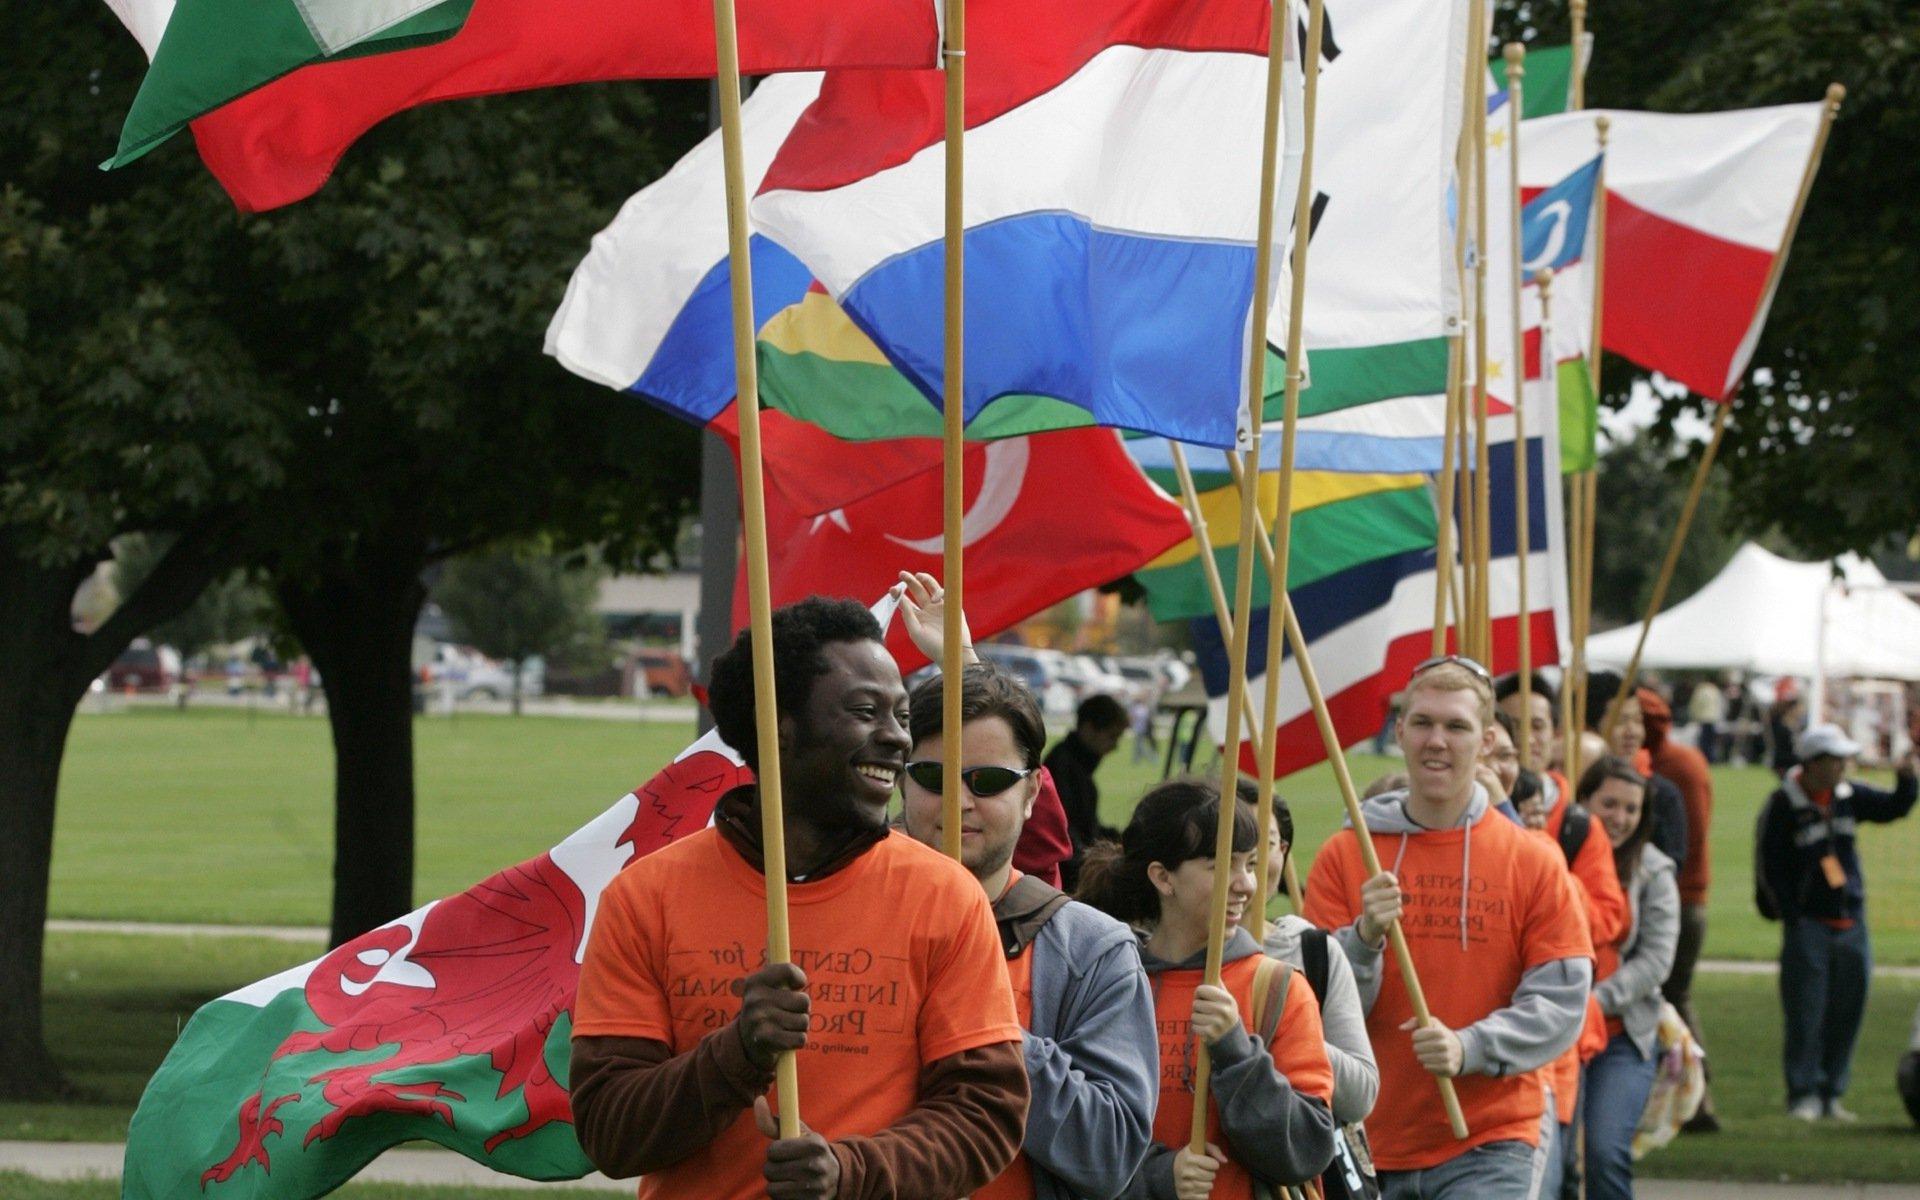 BGSU的学生手持国际旗帜走过校园.